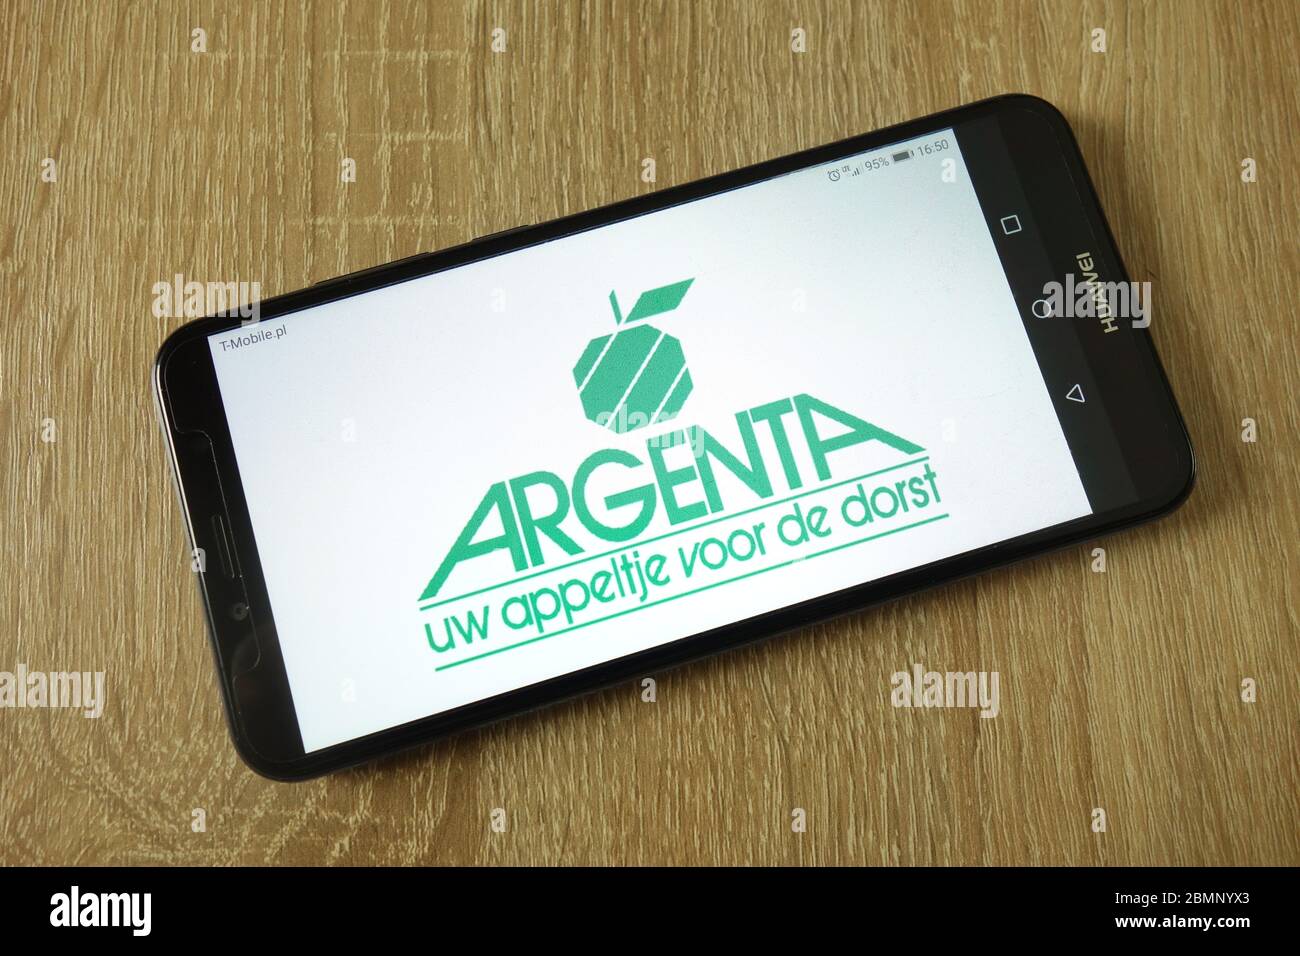 Argenta bank logo displayed on smartphone Stock Photo - Alamy